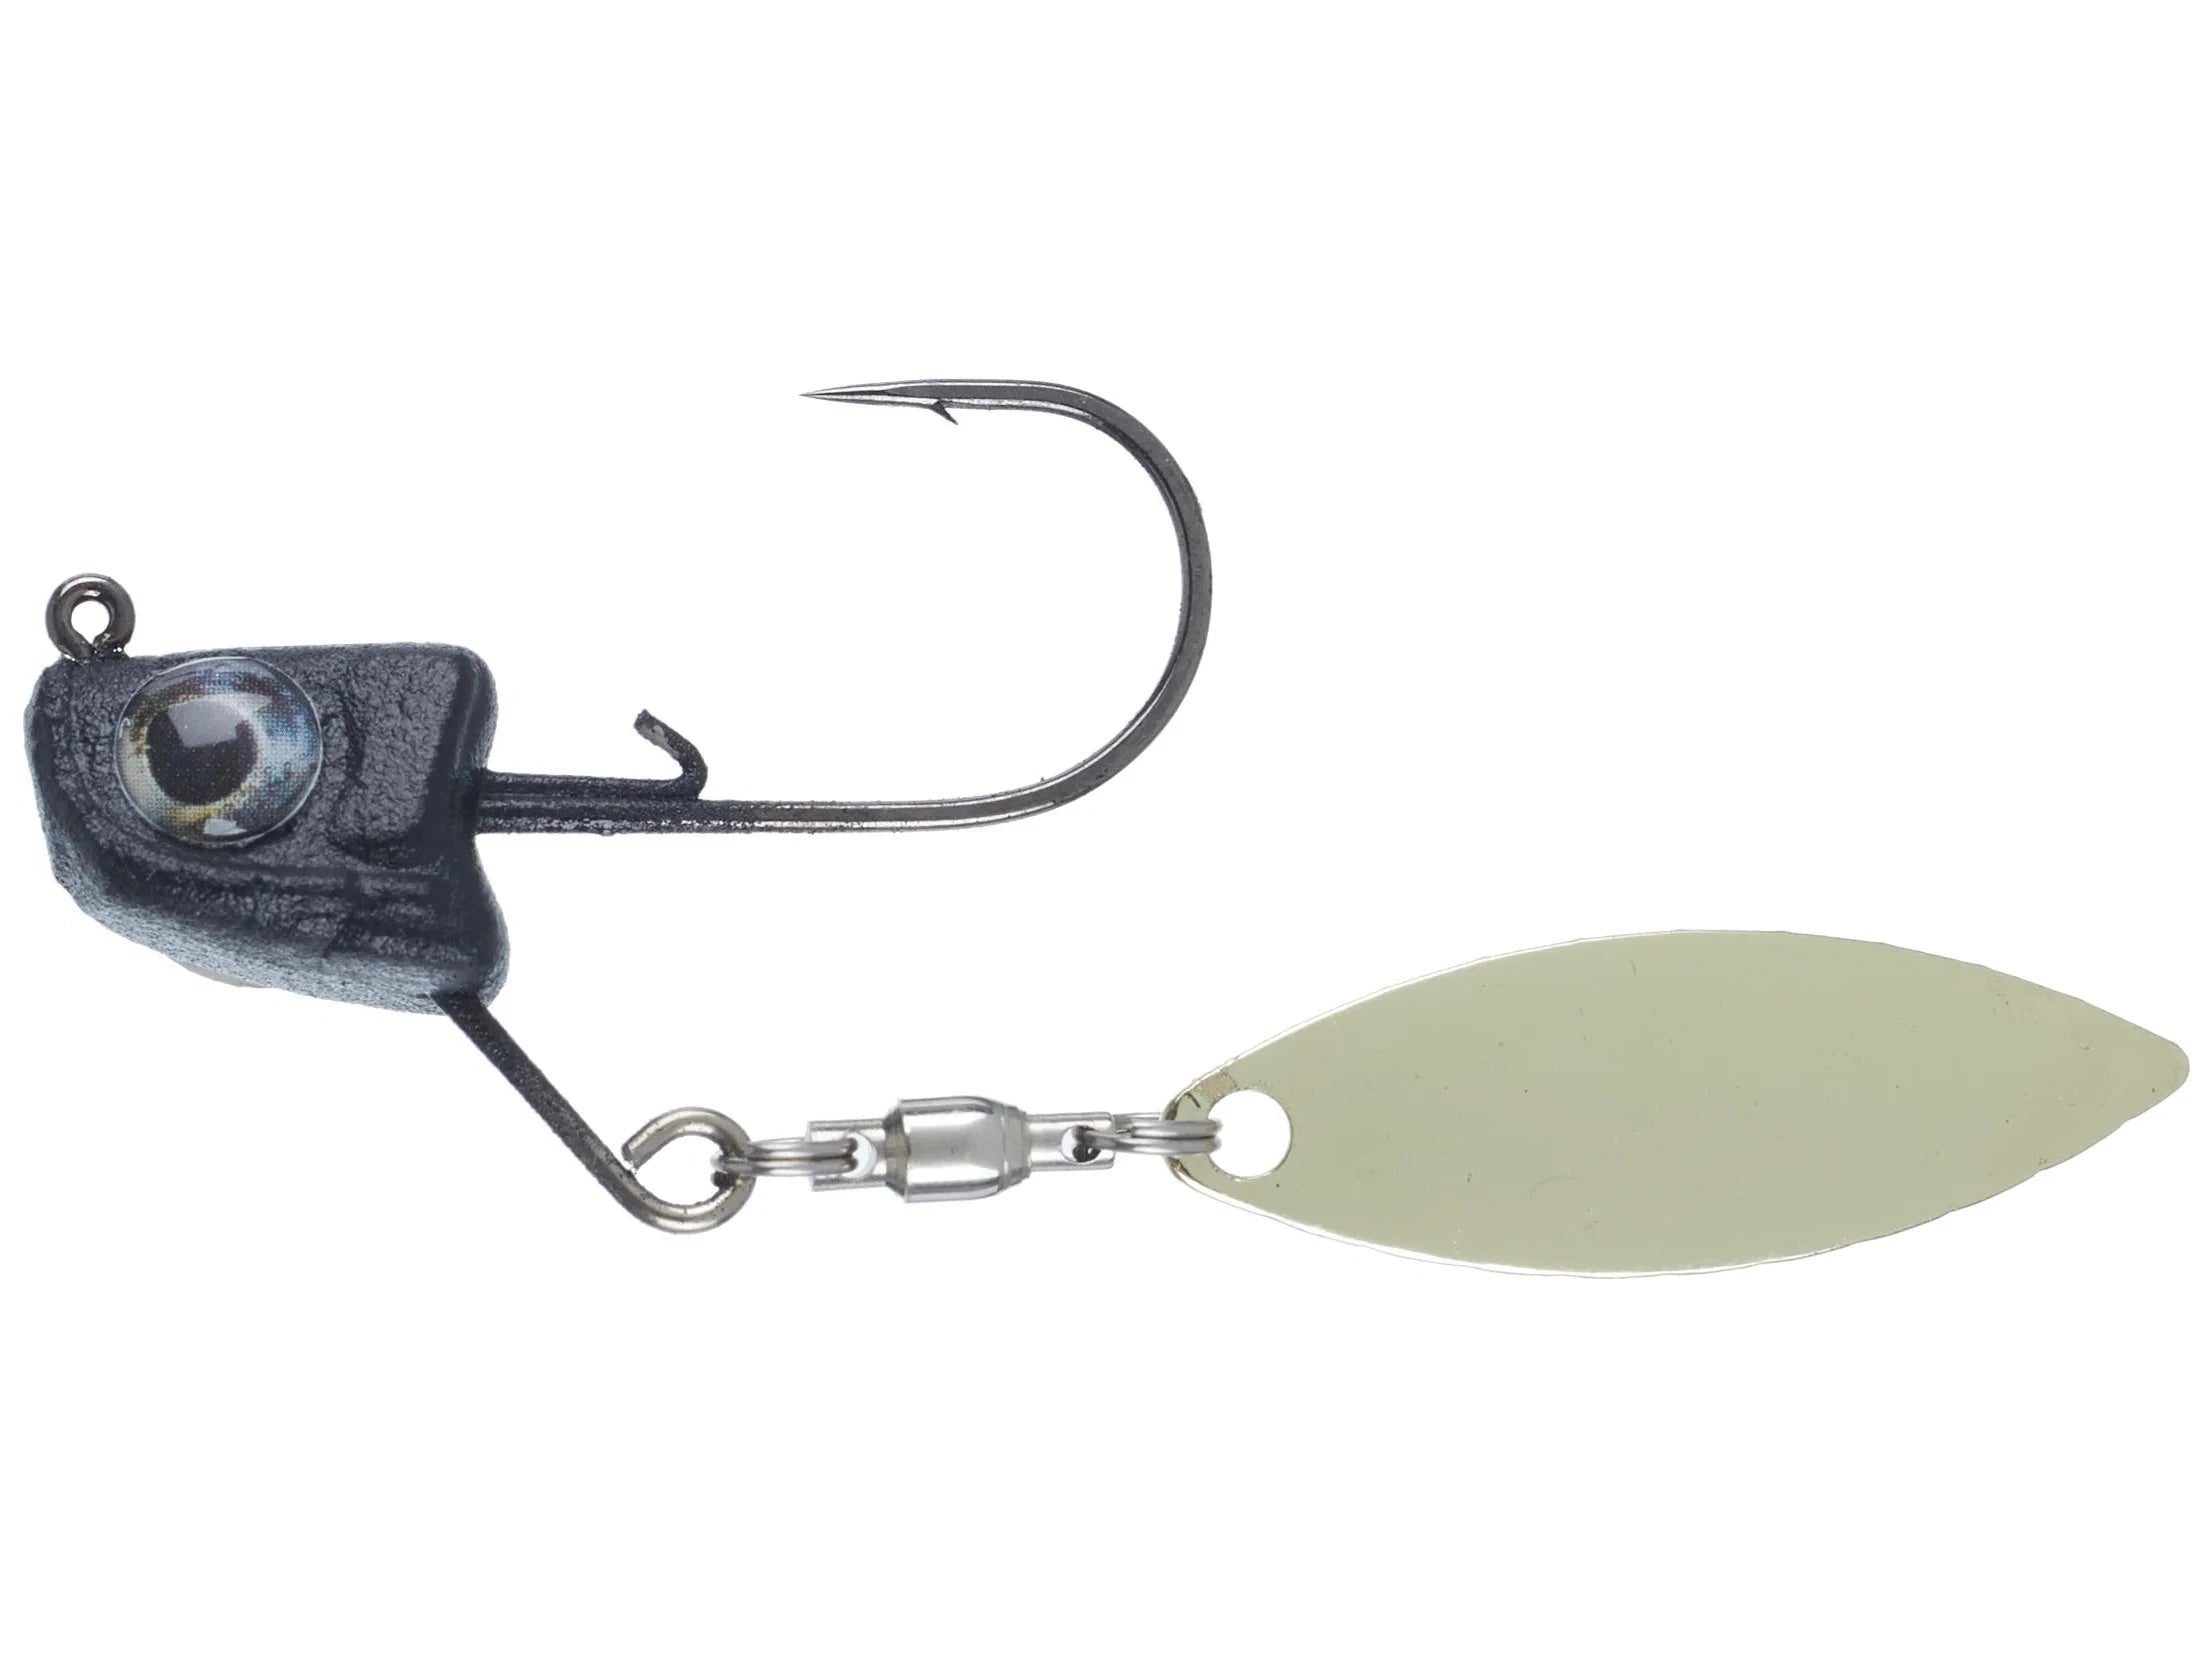 Wide Gap Offset Hook Fishing Hooks Set Wacky Rig Drop Shot Rig Crank Worm Hook  Walleye Bass Carp Fishing Hooks Tackle Kit #6 #4 #2 #1 # 1/0 #2/0 #3/0 50  pieces/set